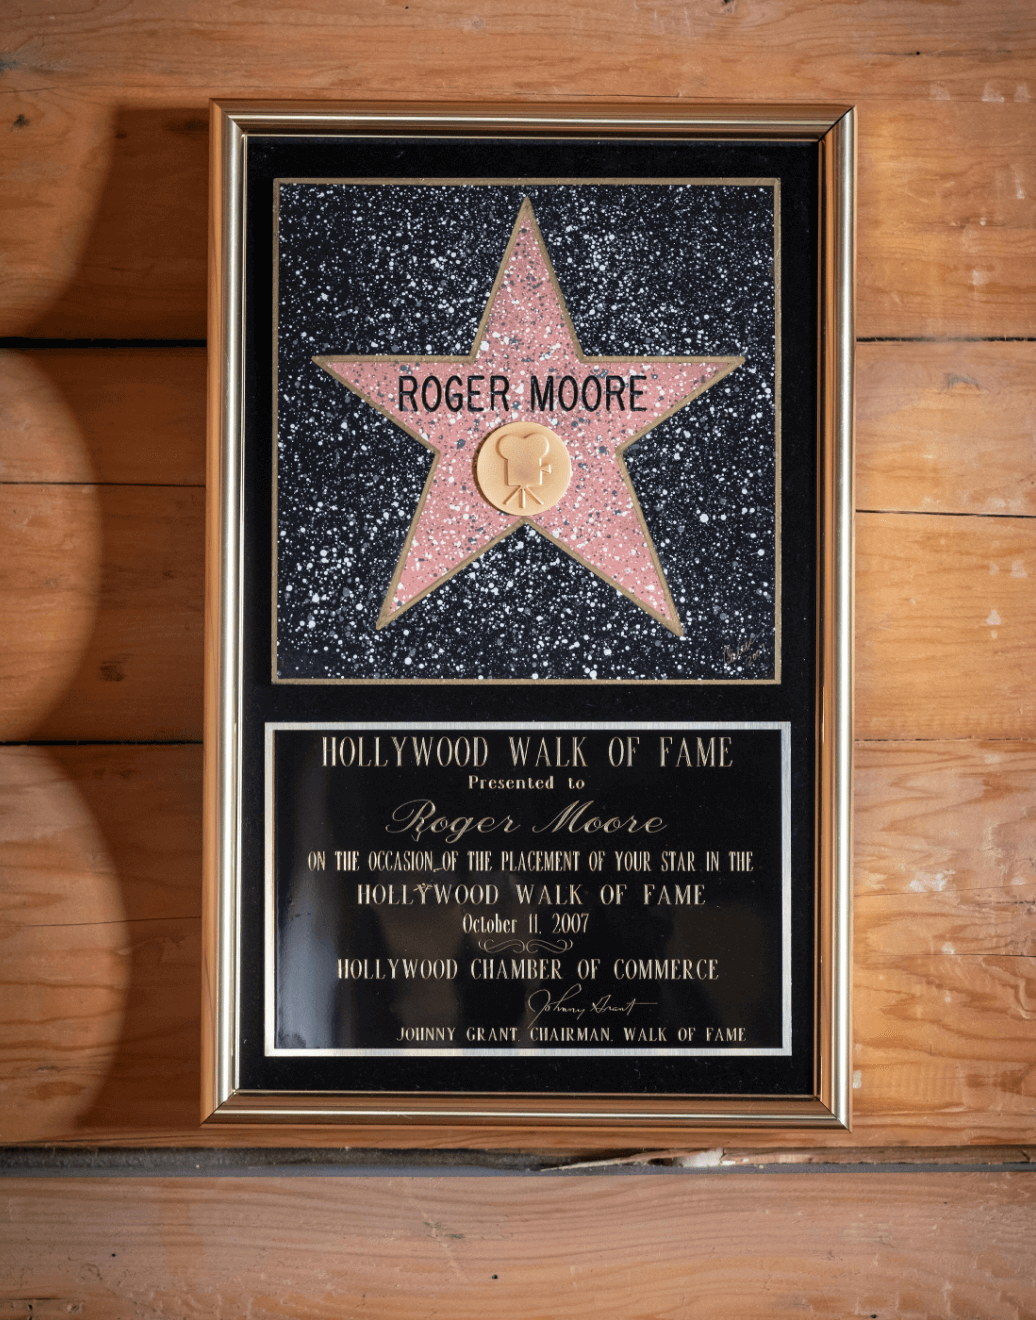 Sir Roger Moore's 'Hollywood Walk of Fame' presentation plaque